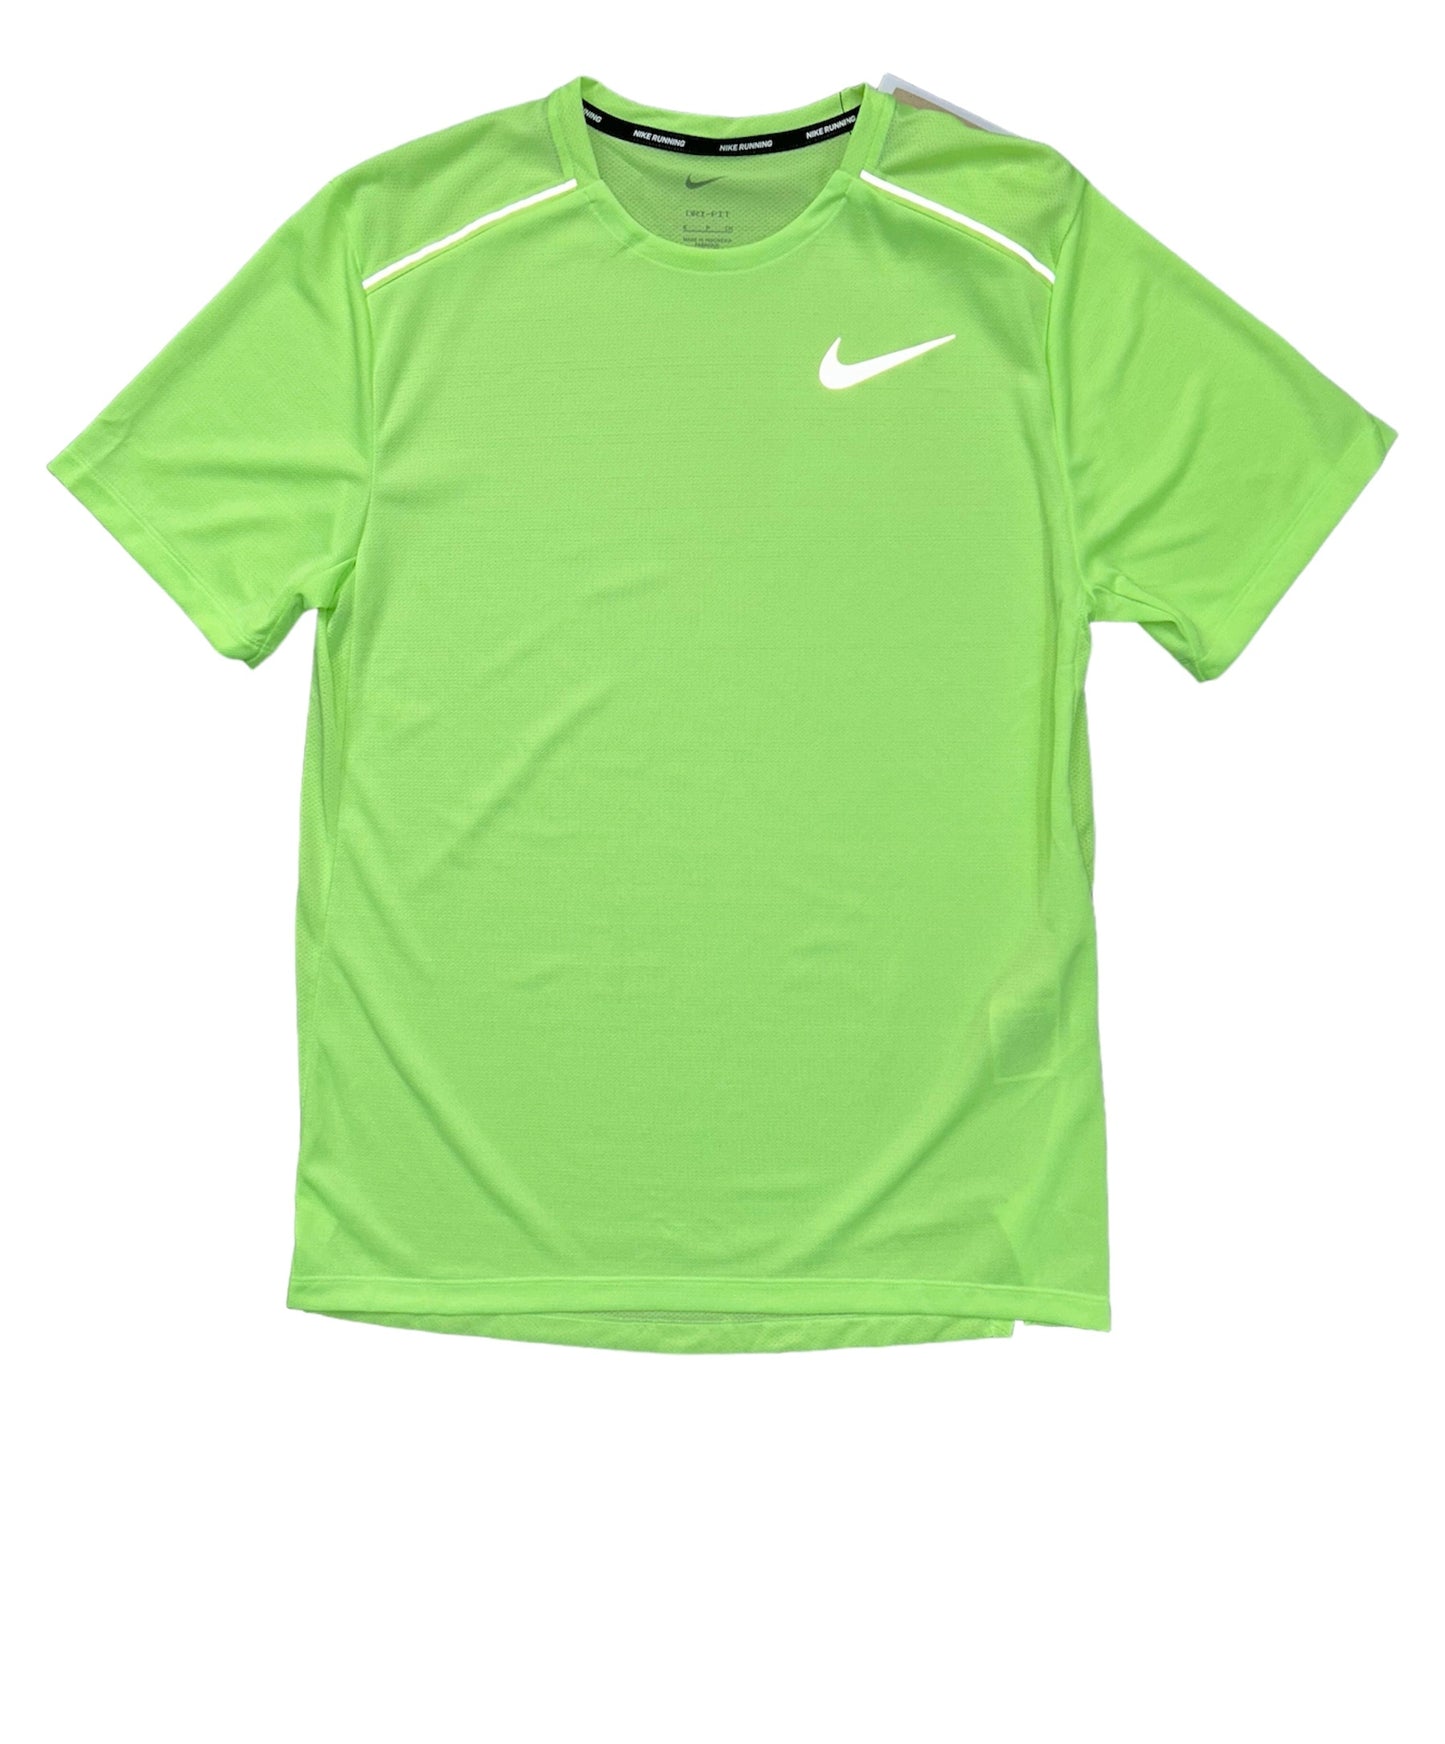 Nike miler 1.0 ghost green